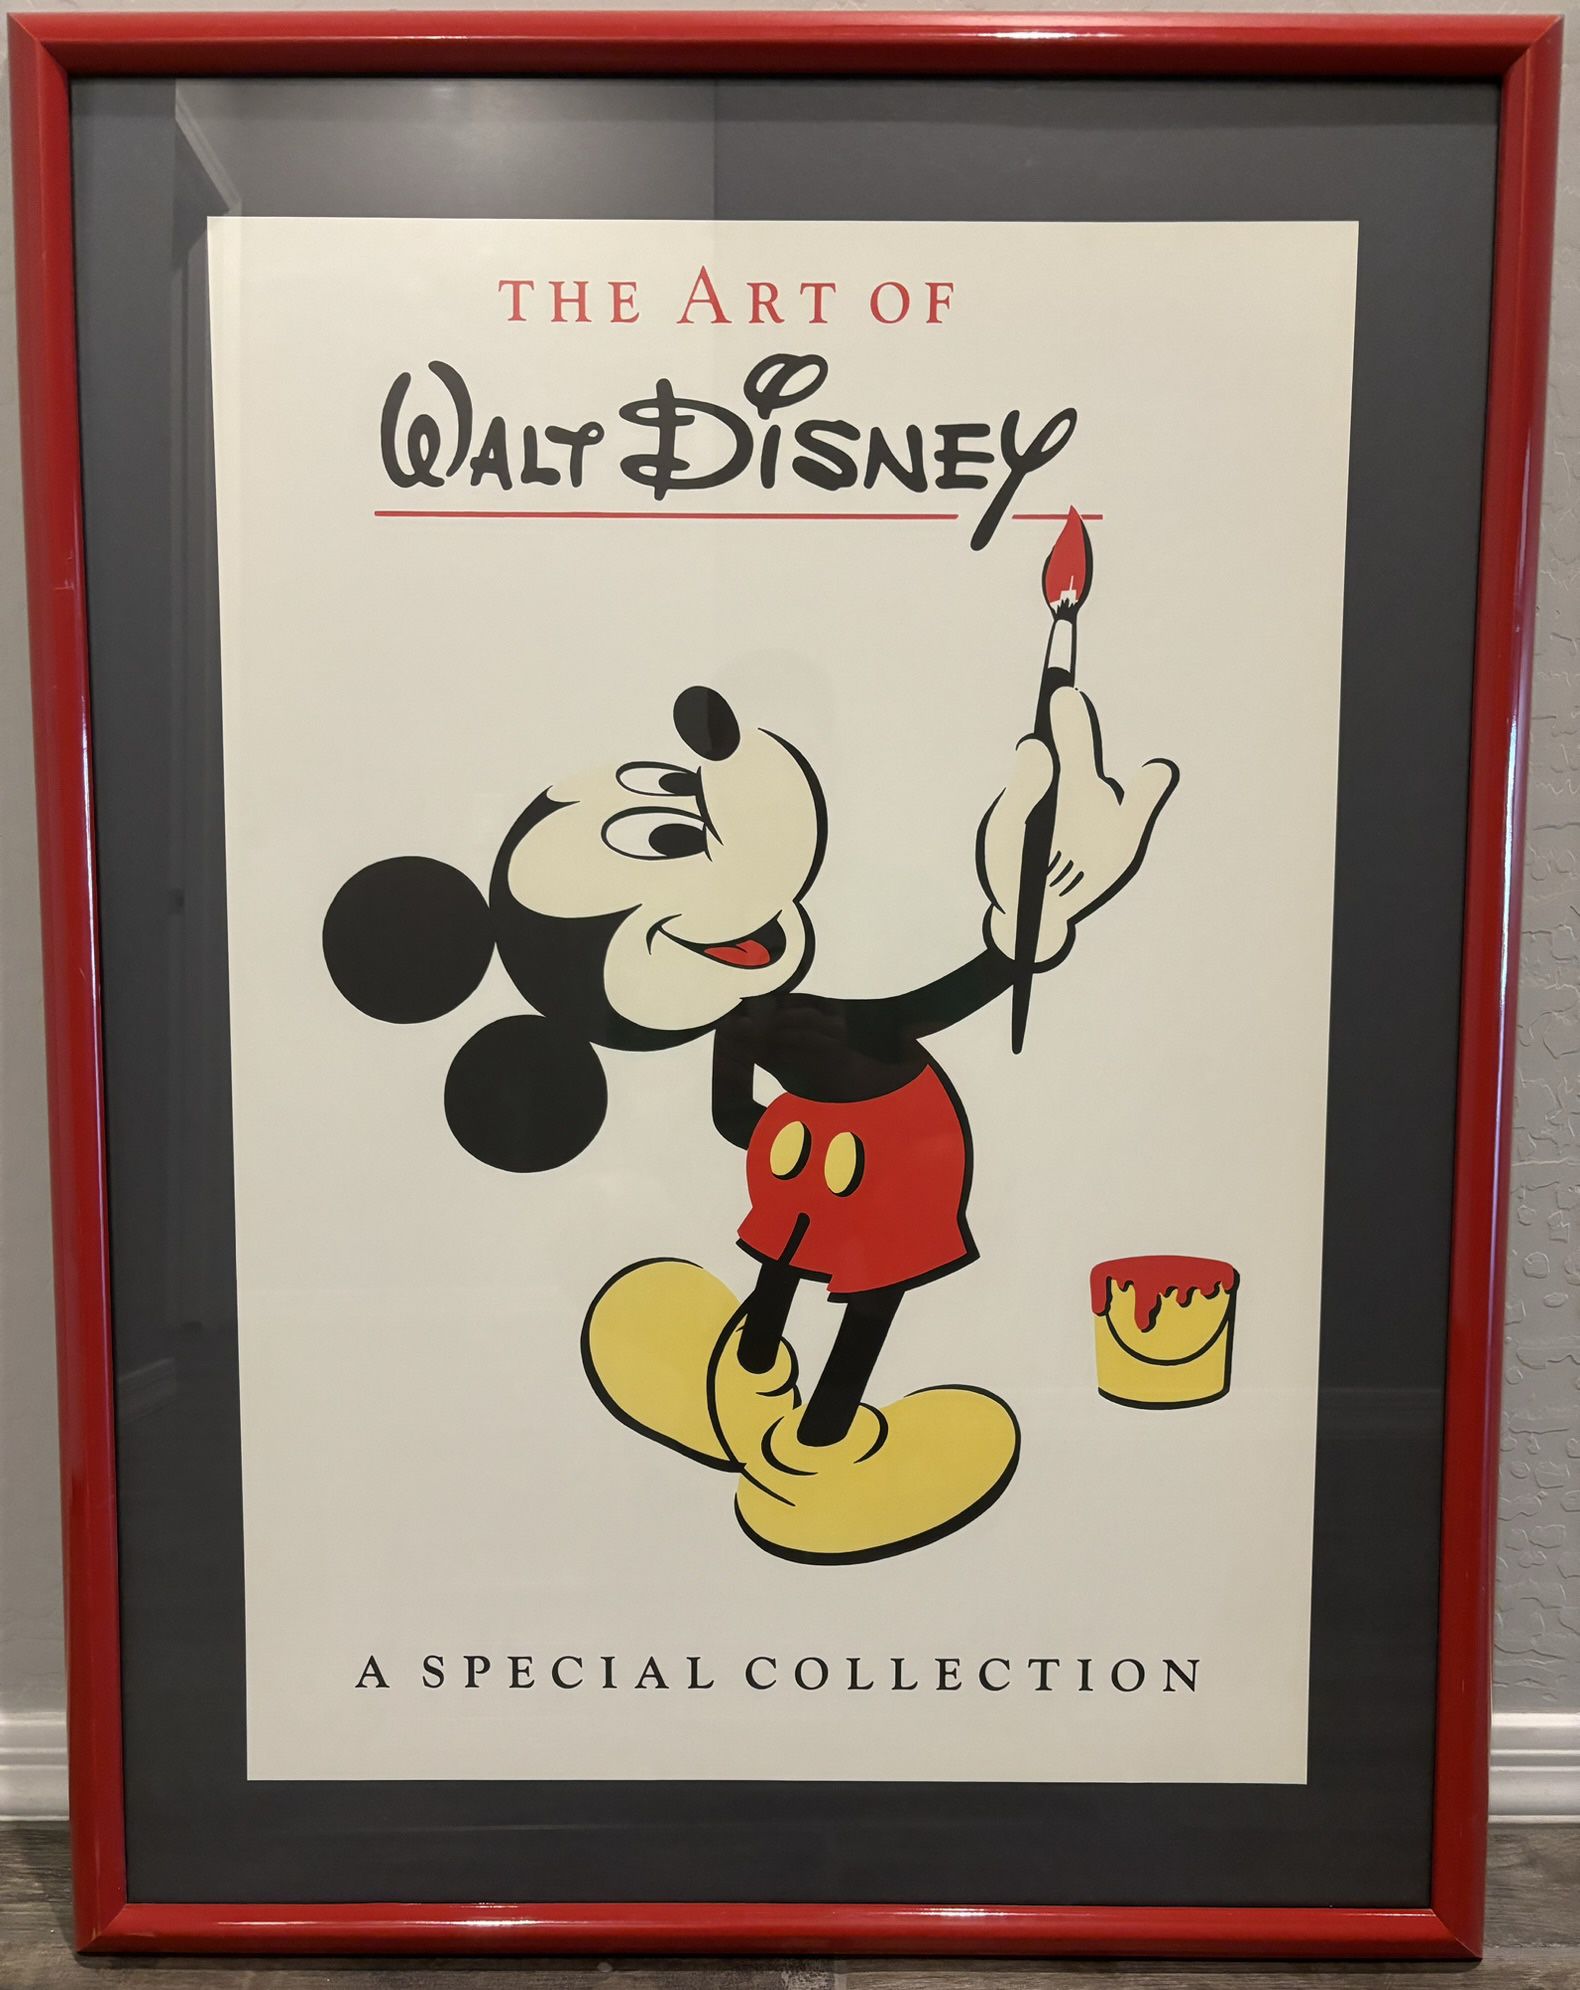 Limited Edition “The Art of Walt Disney” Framed Poster